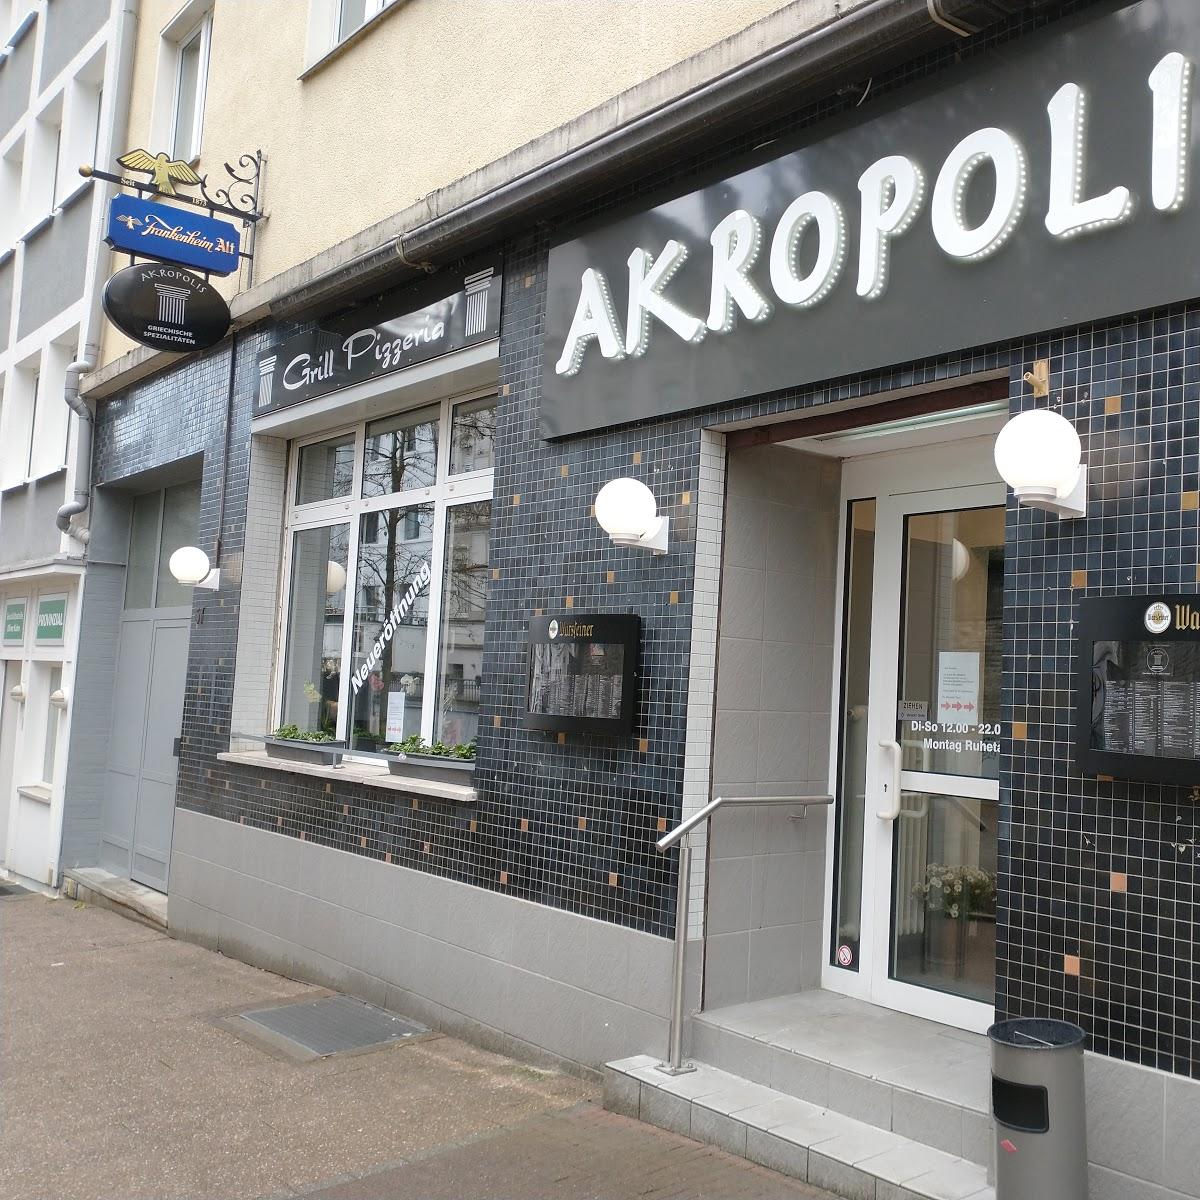 Restaurant "Akropolis Grill Pizzeria Restaurant" in Velbert